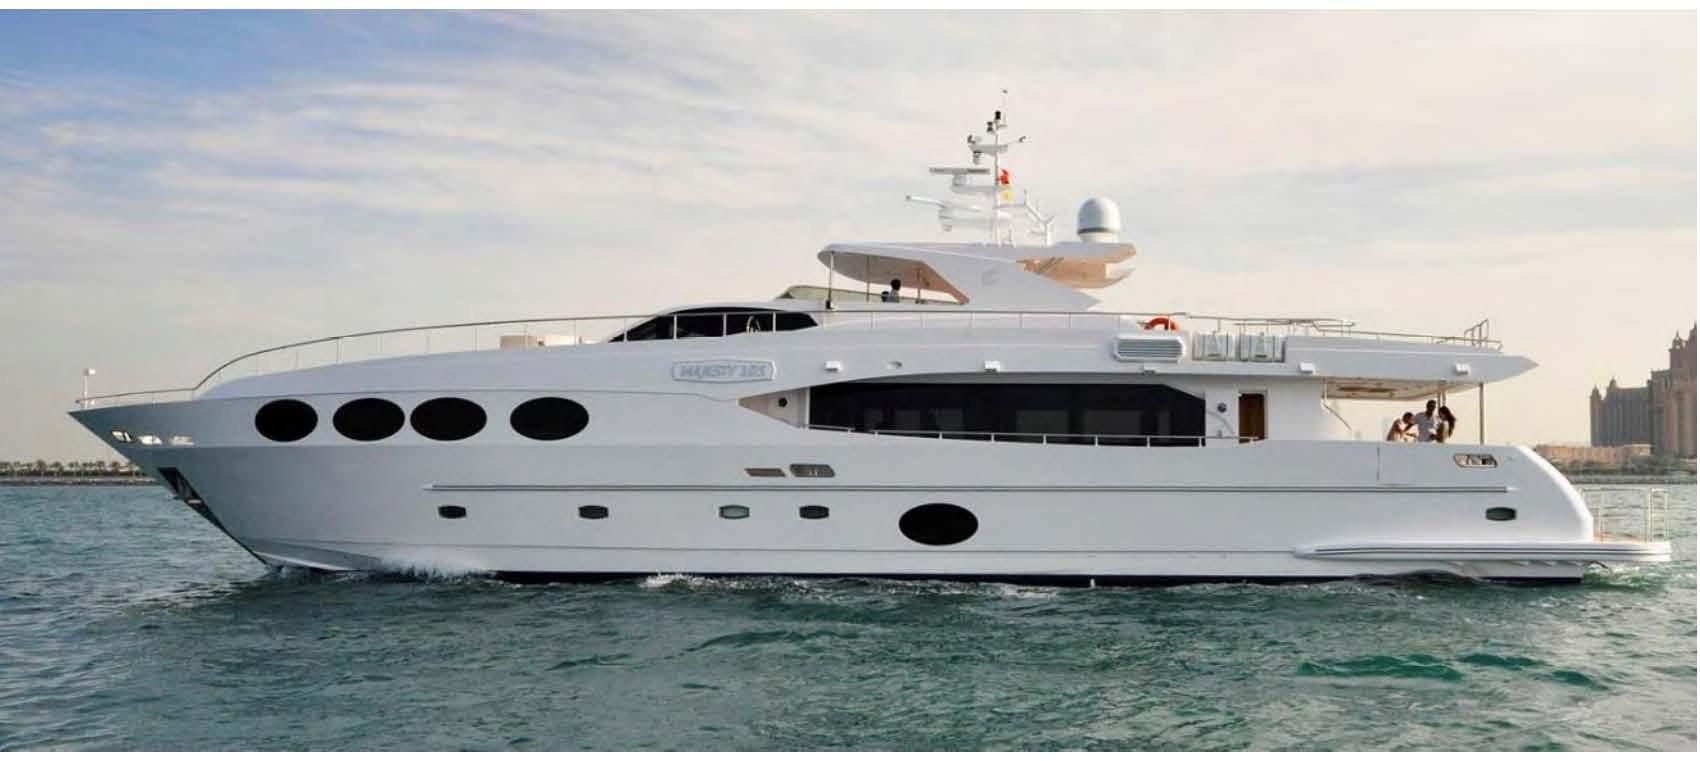 majesty 105 yacht for sale